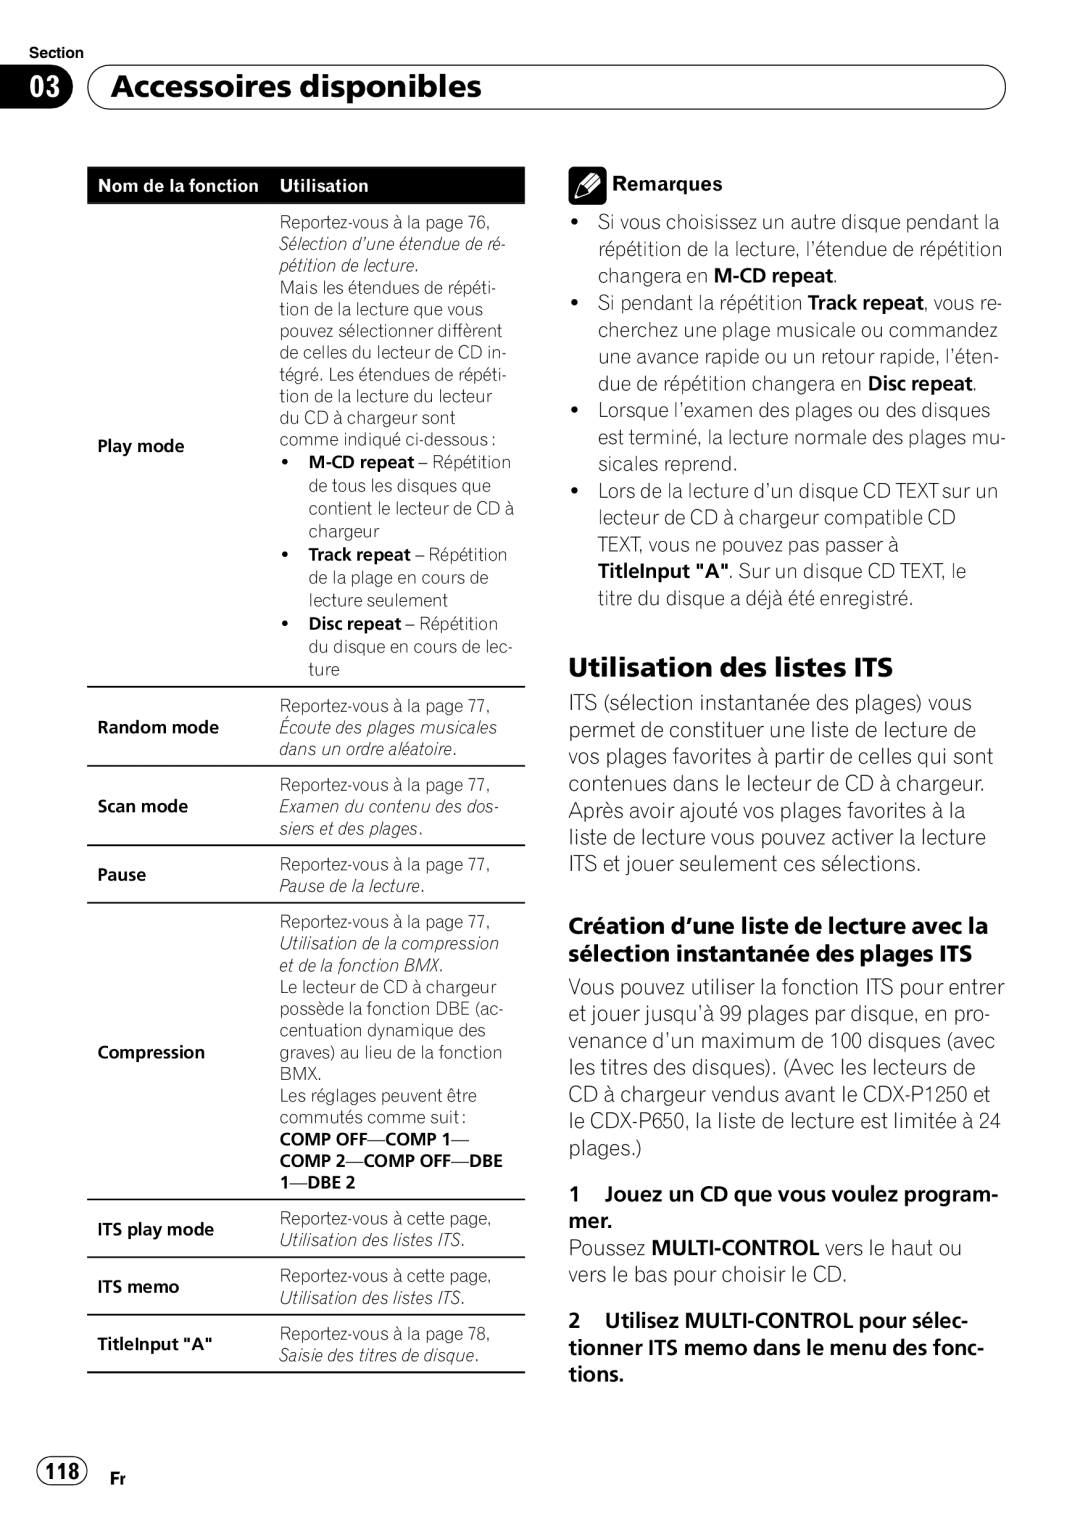 Pioneer DEH-P5900IB operation manual Utilisation des listes ITS, 118 Fr, 03Accessoires disponibles 